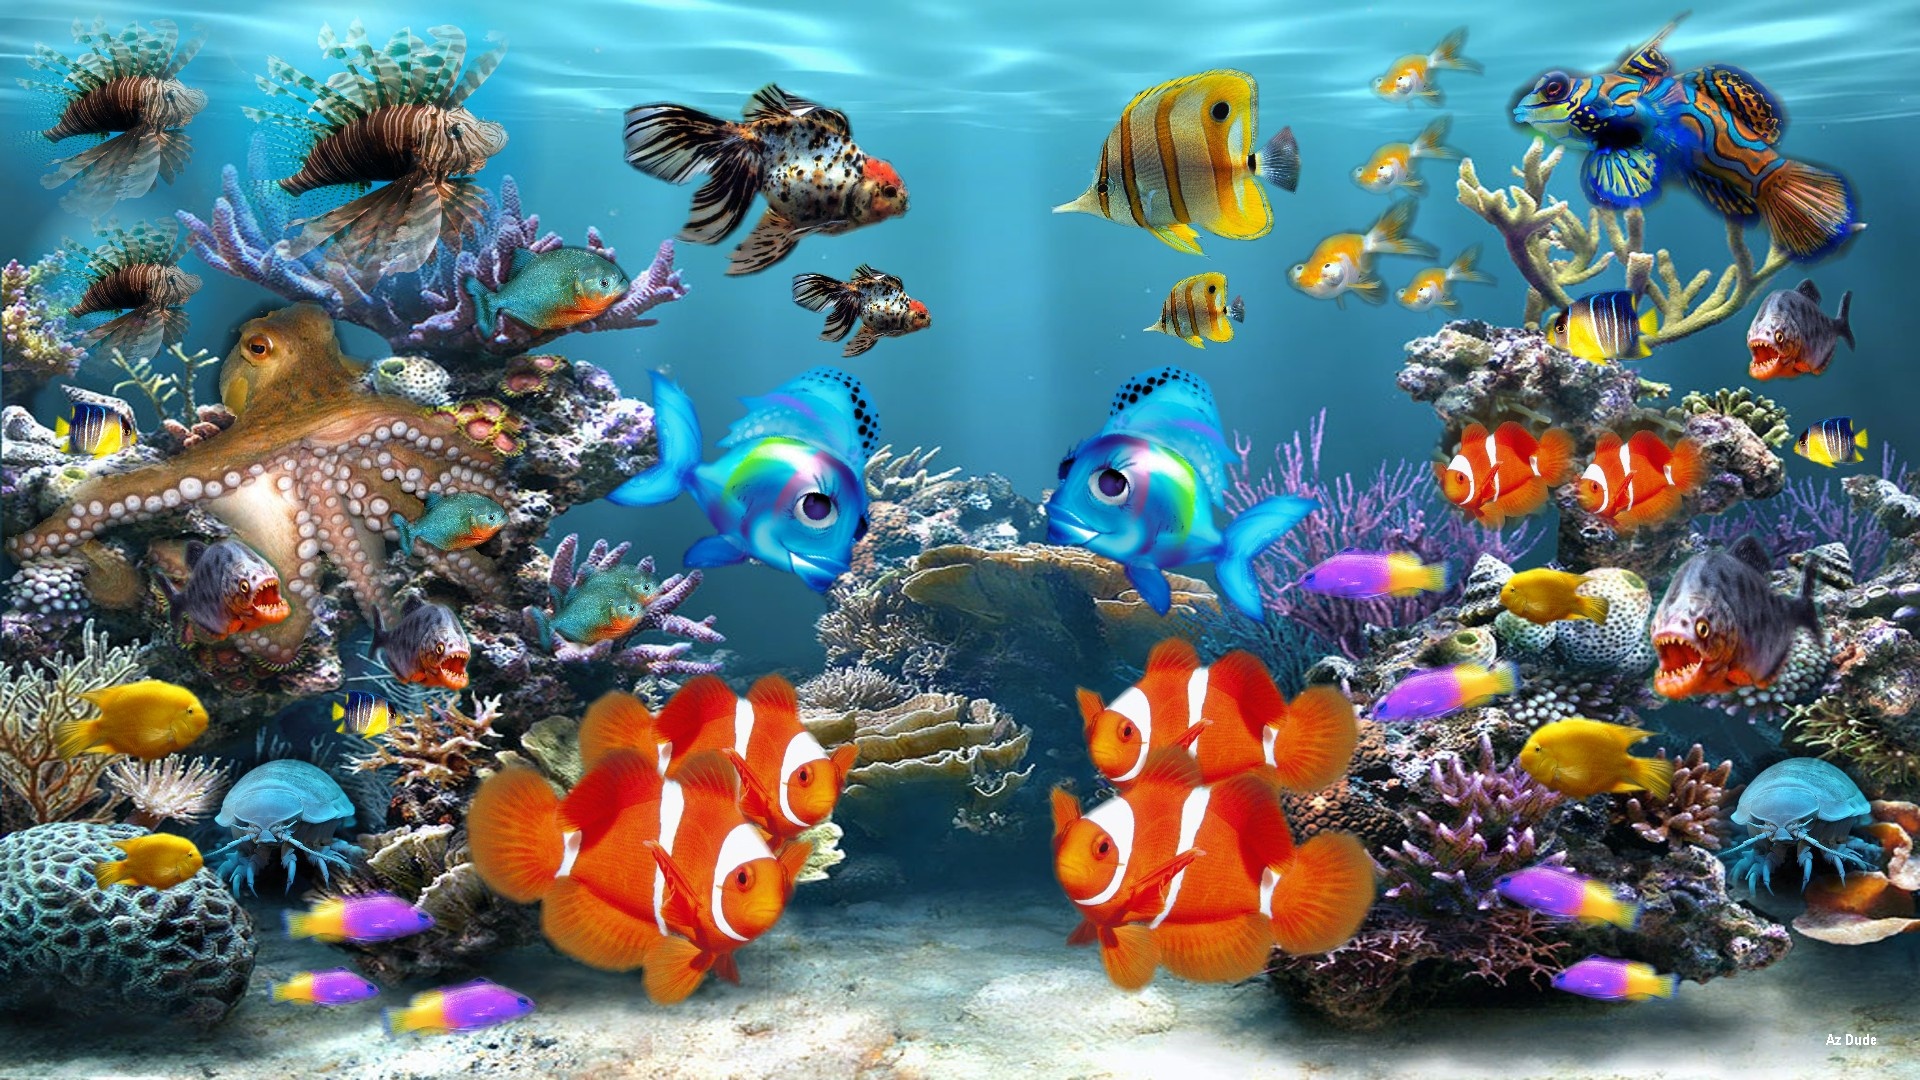 Aquarium Wallpaper In HD Resoutions For Has